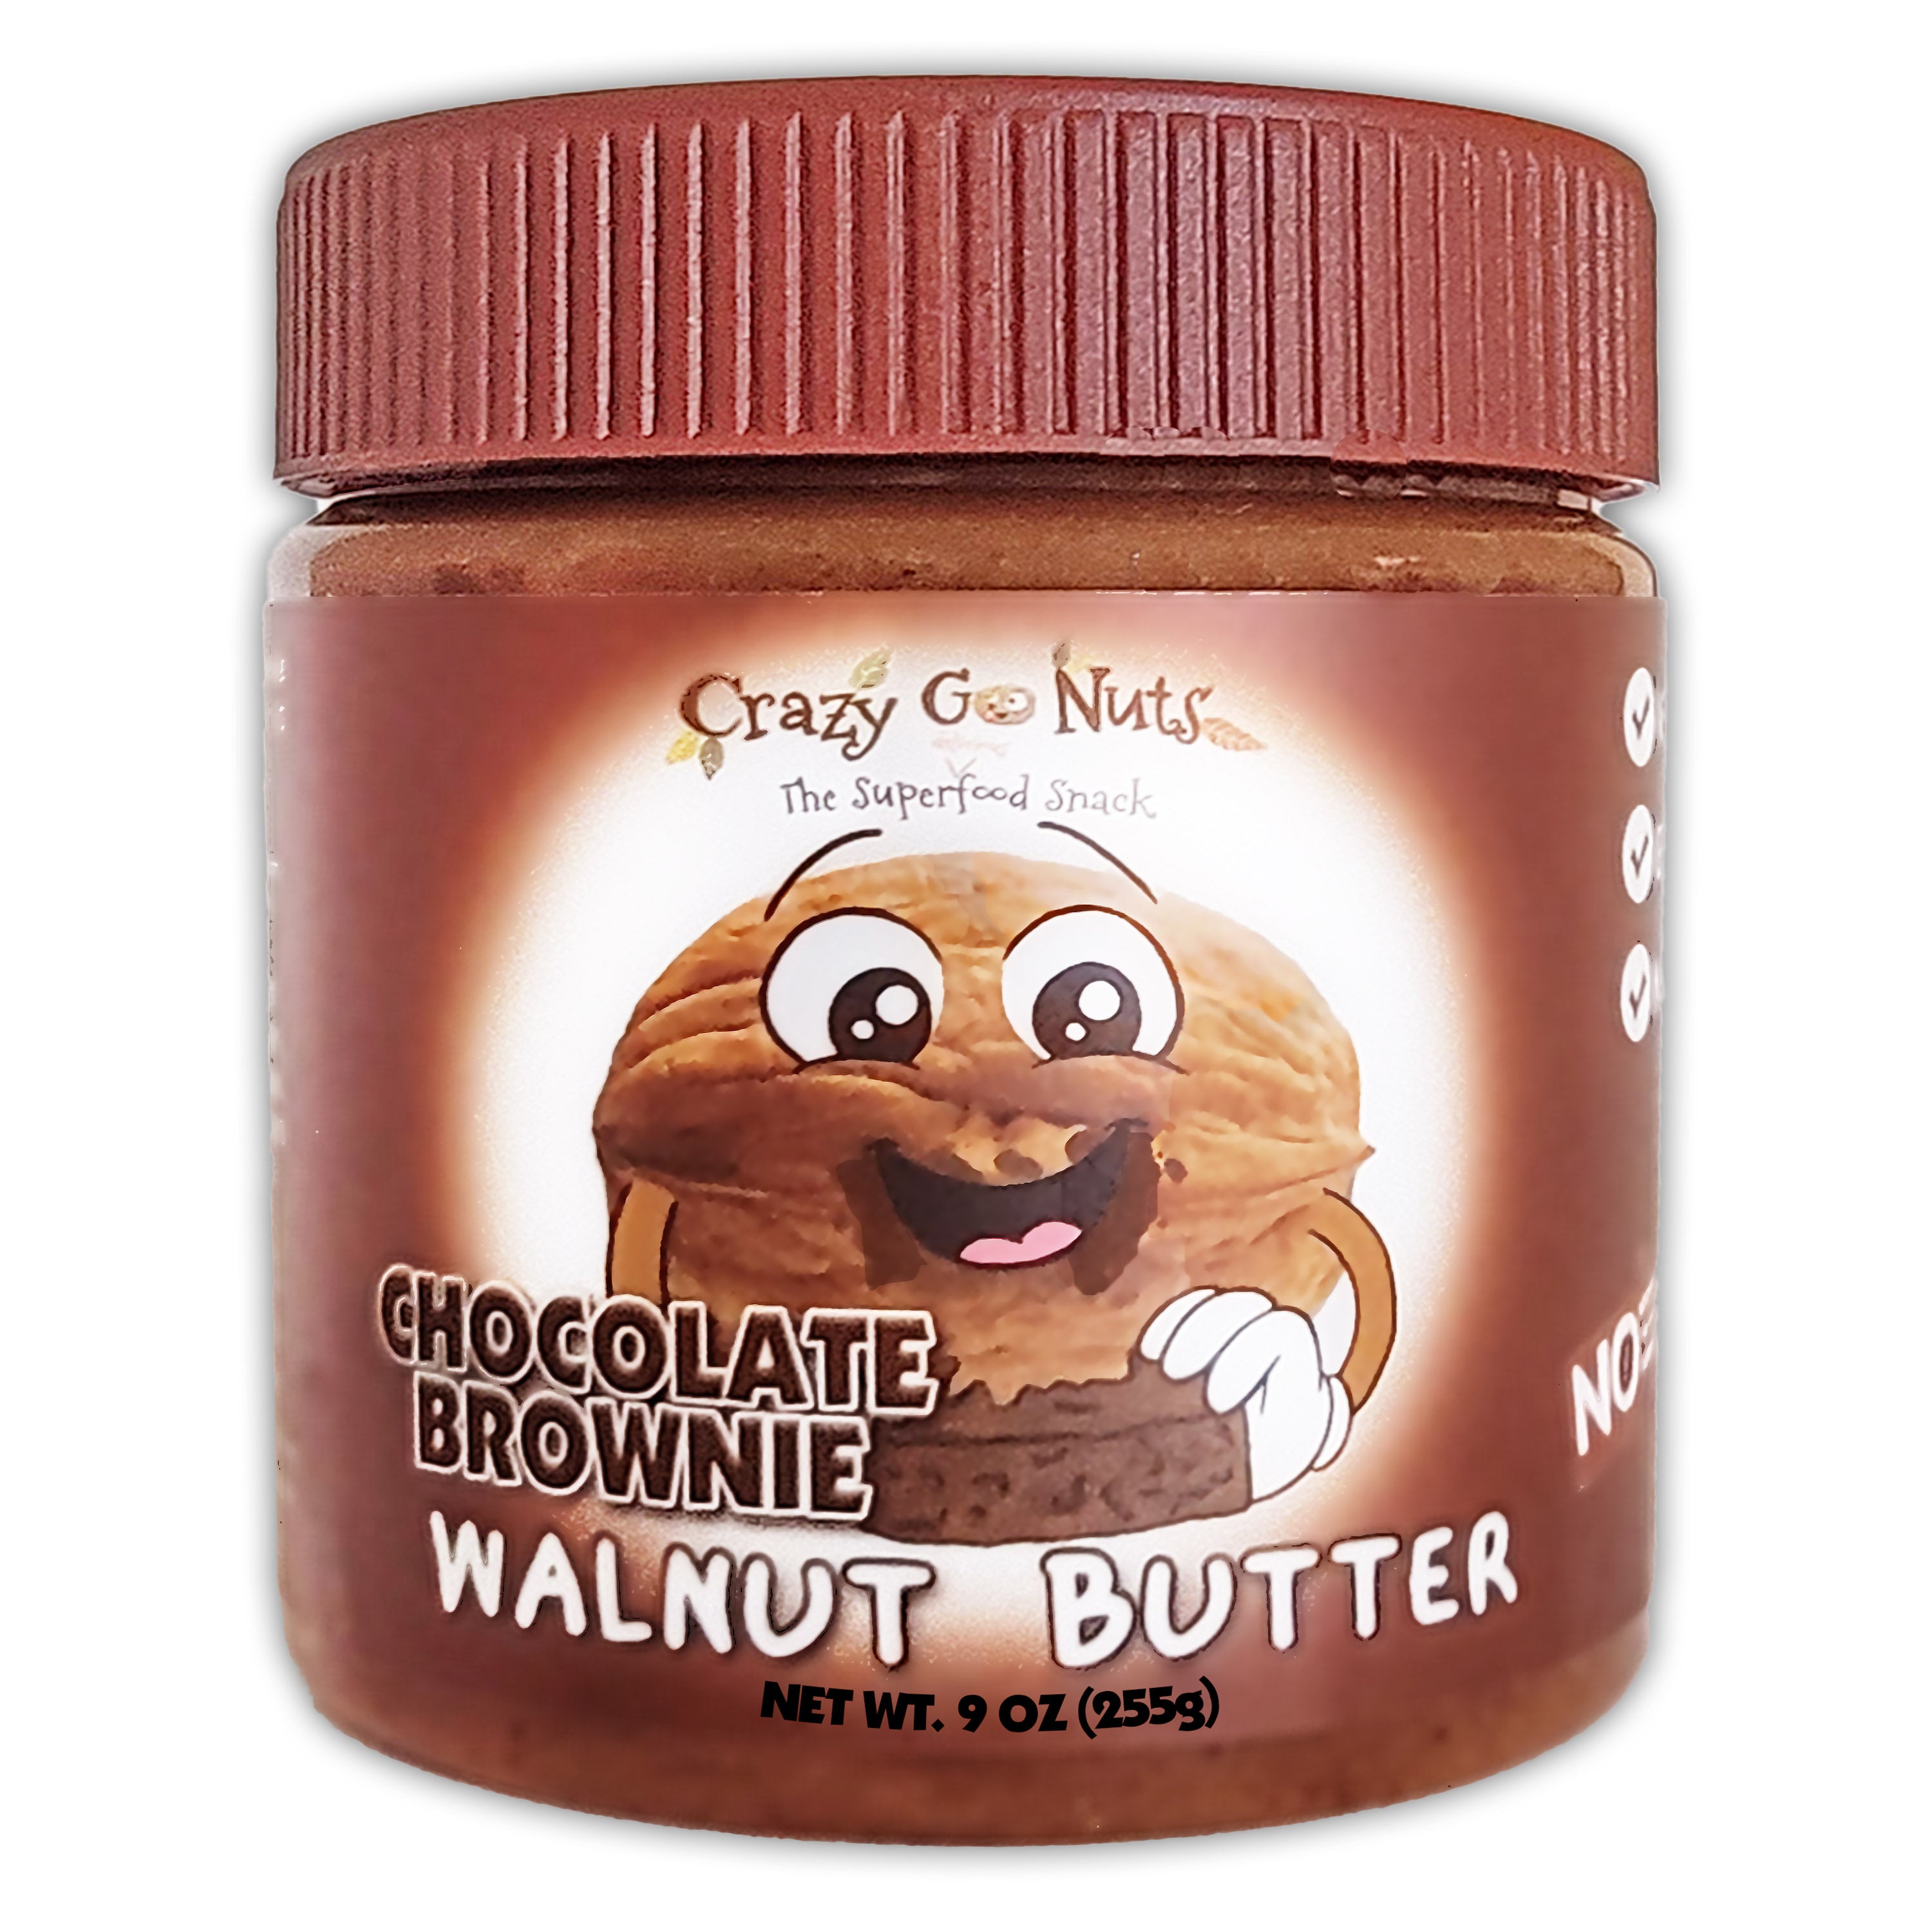 A jar of chocolate brownie walnut butter